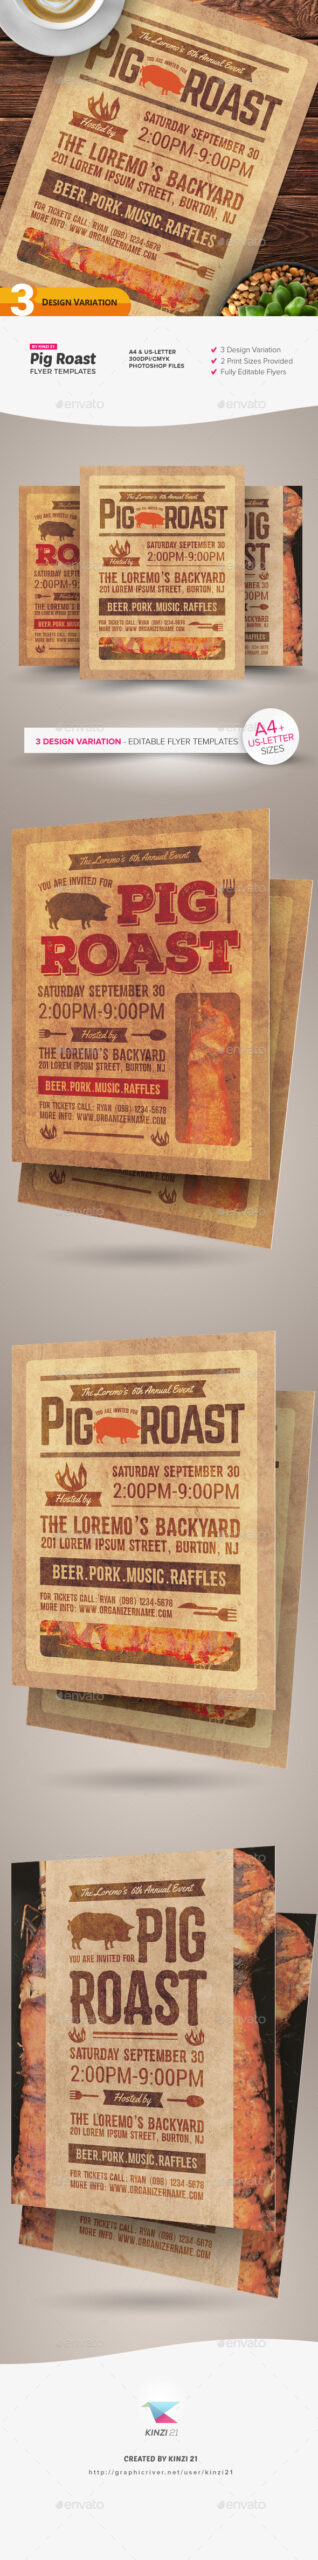 Pig Roast Flyer Templates For Pig Roast Flyer Template For Pig Roast Flyer Template